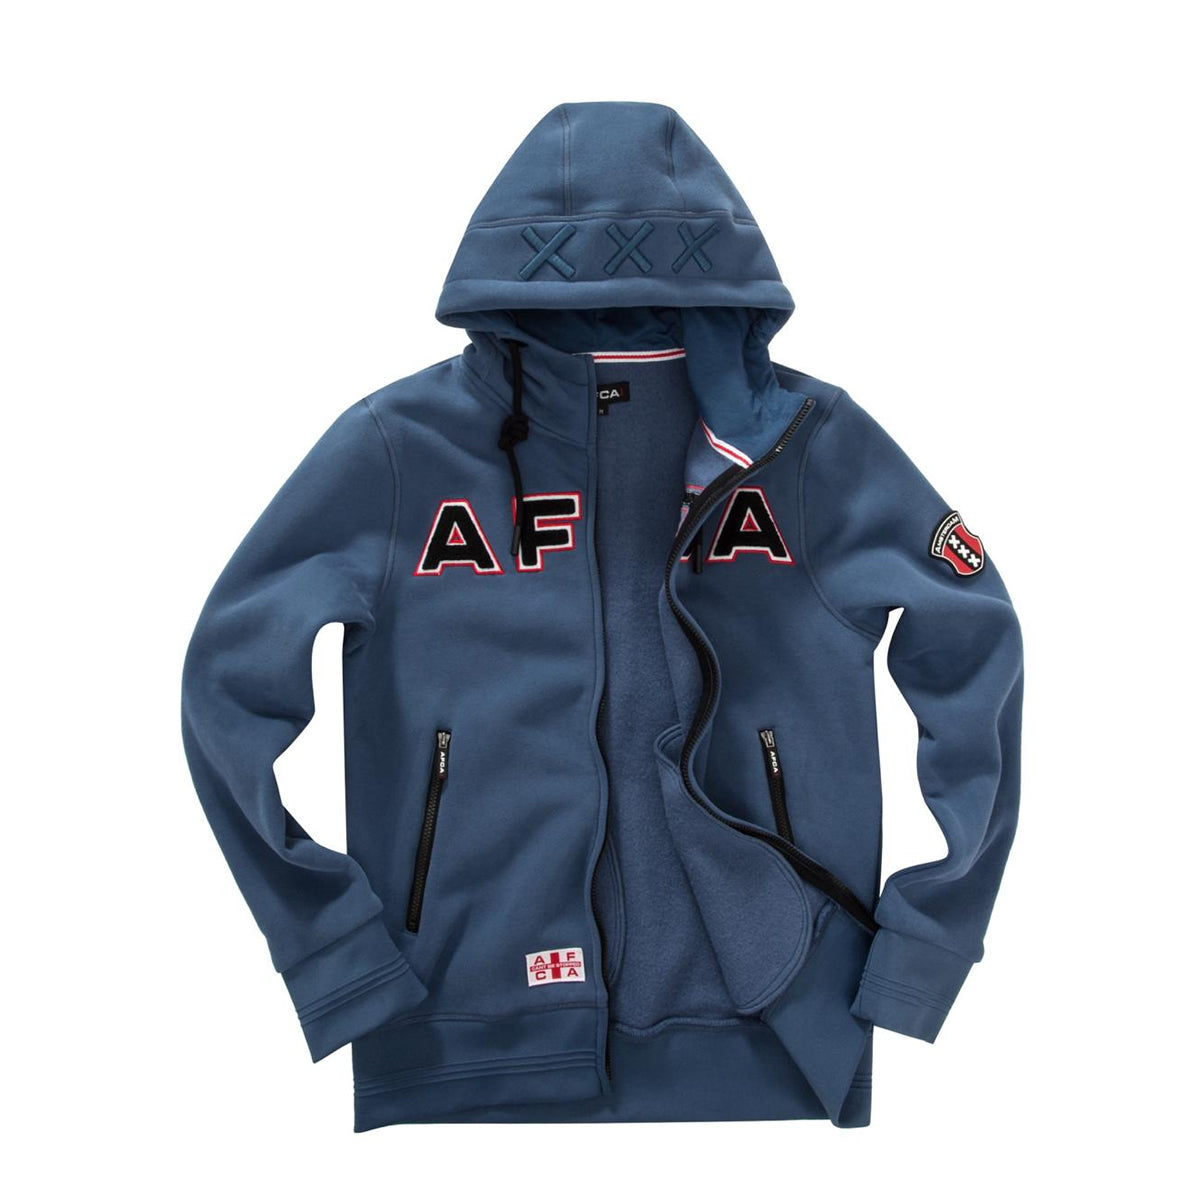 vest AFCA blue zipped